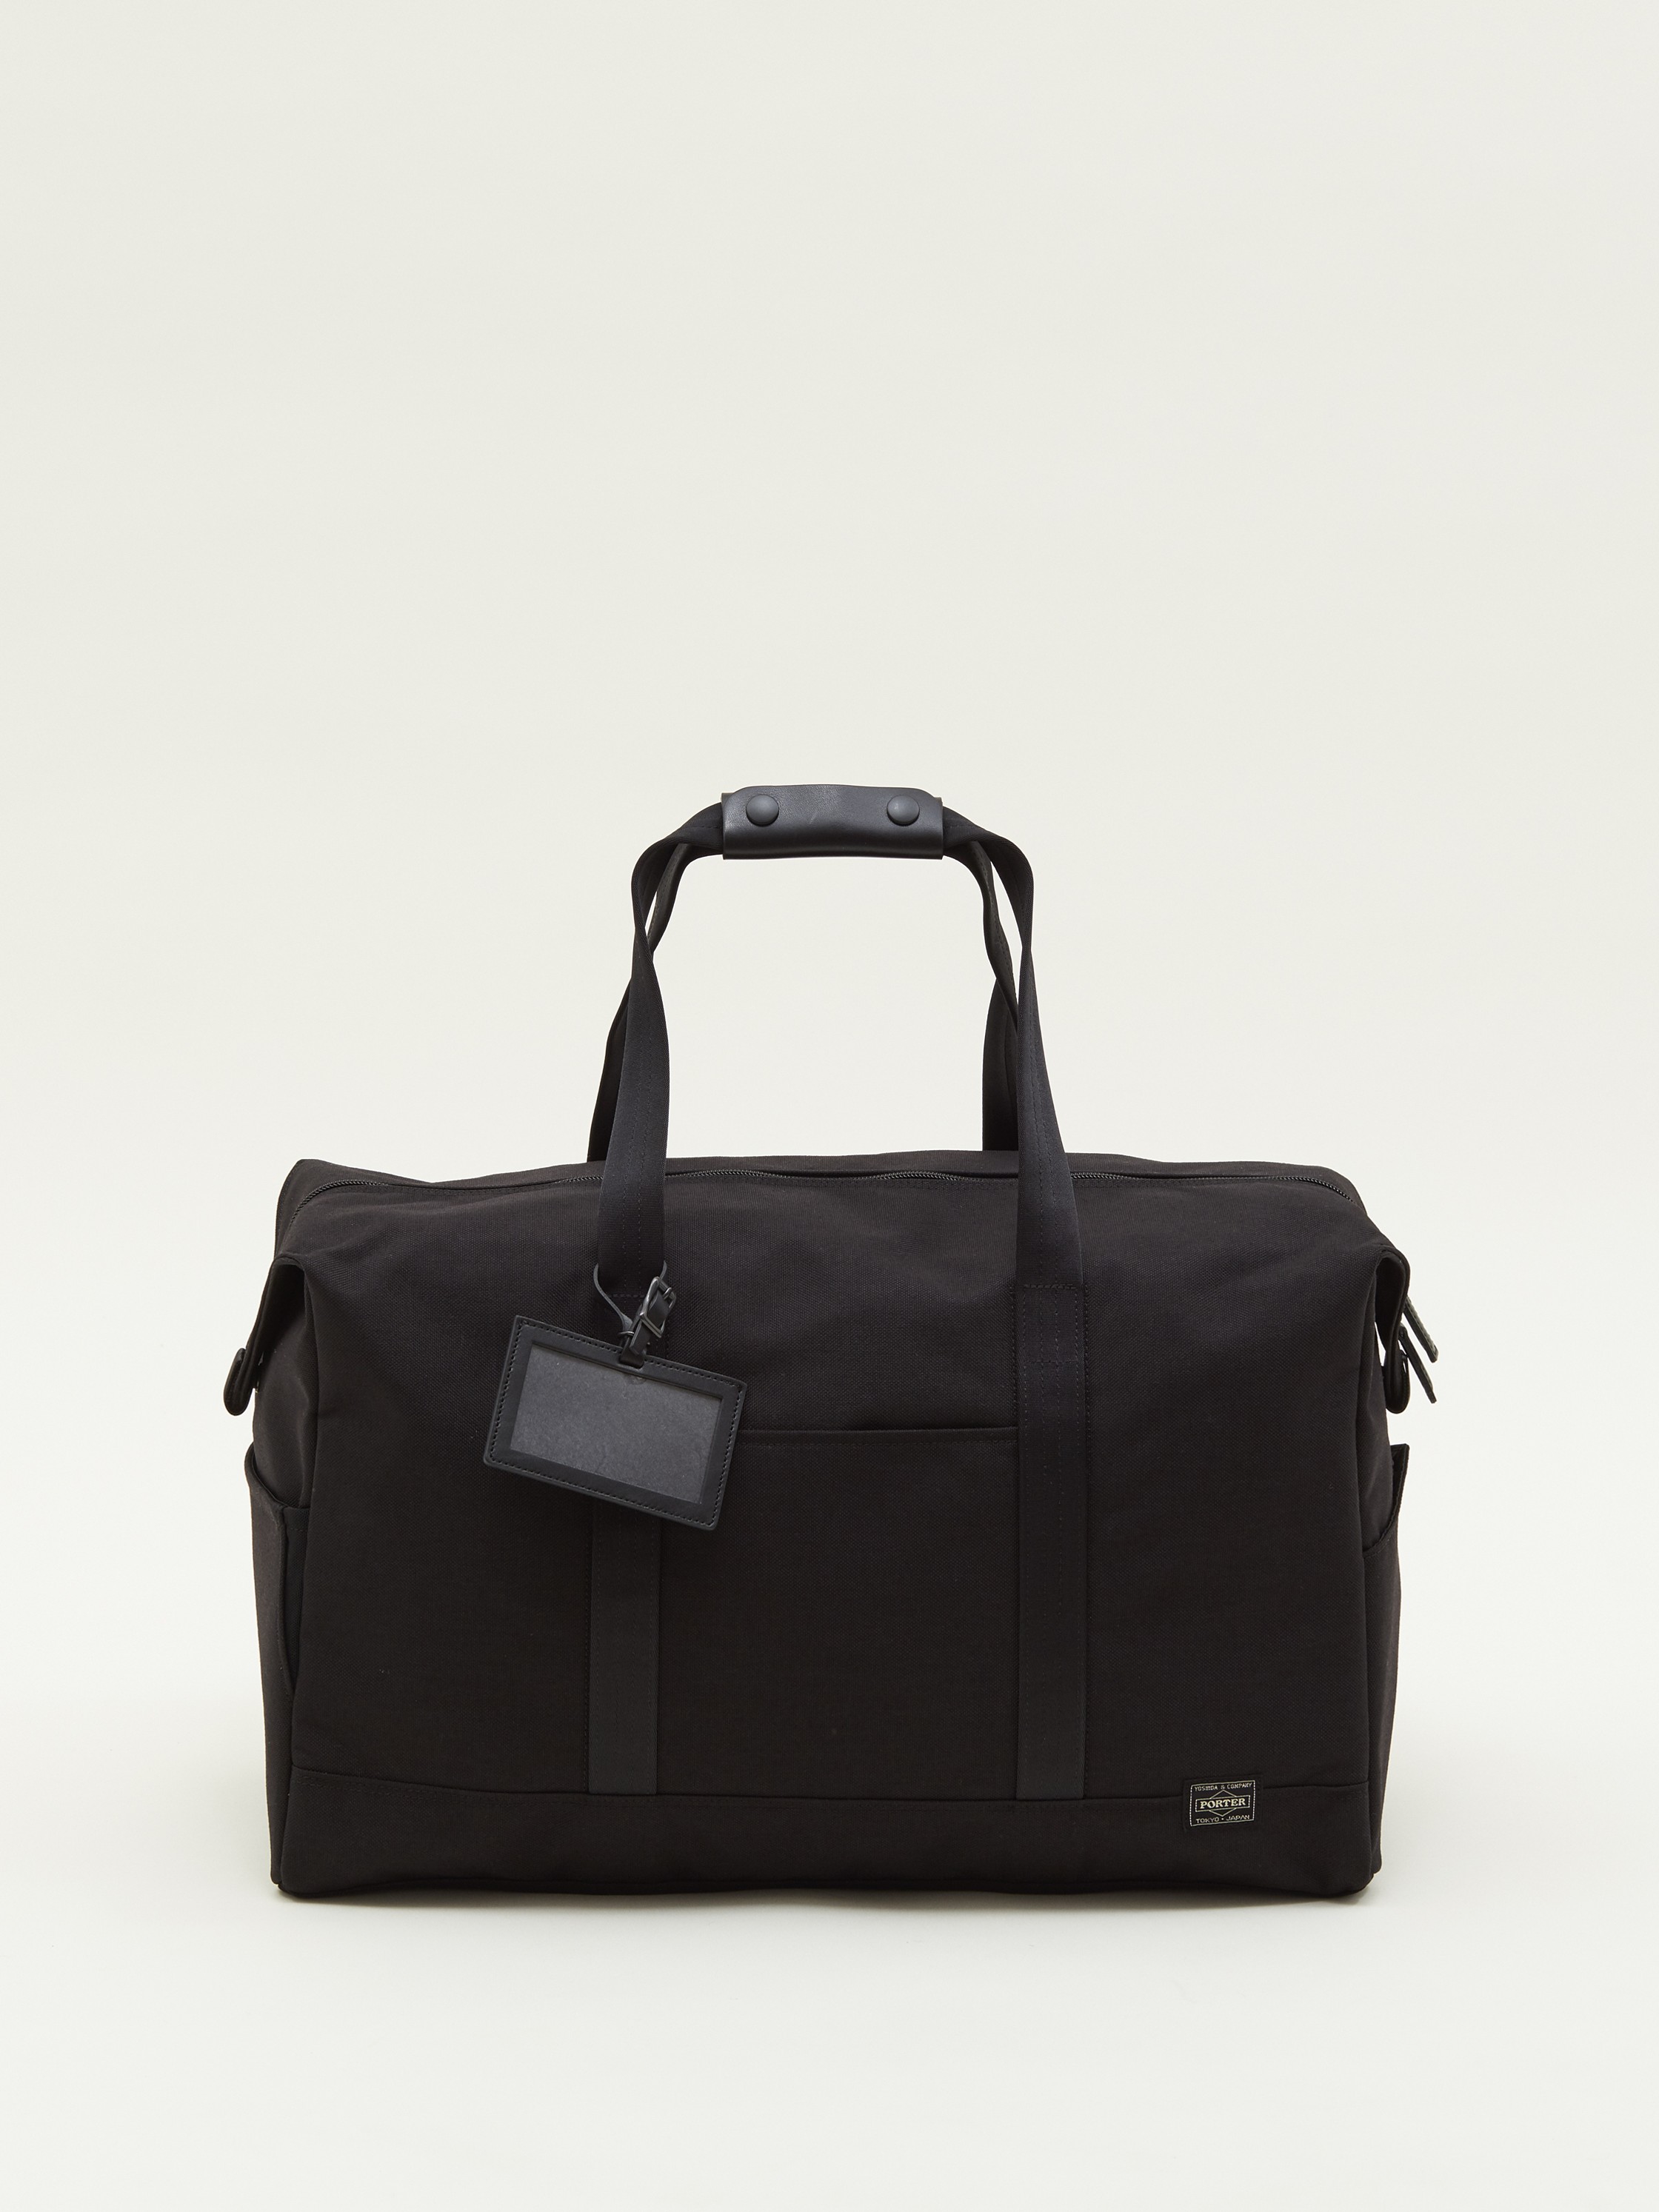 Boston bag - Porter - Bags - Shop | Monocle